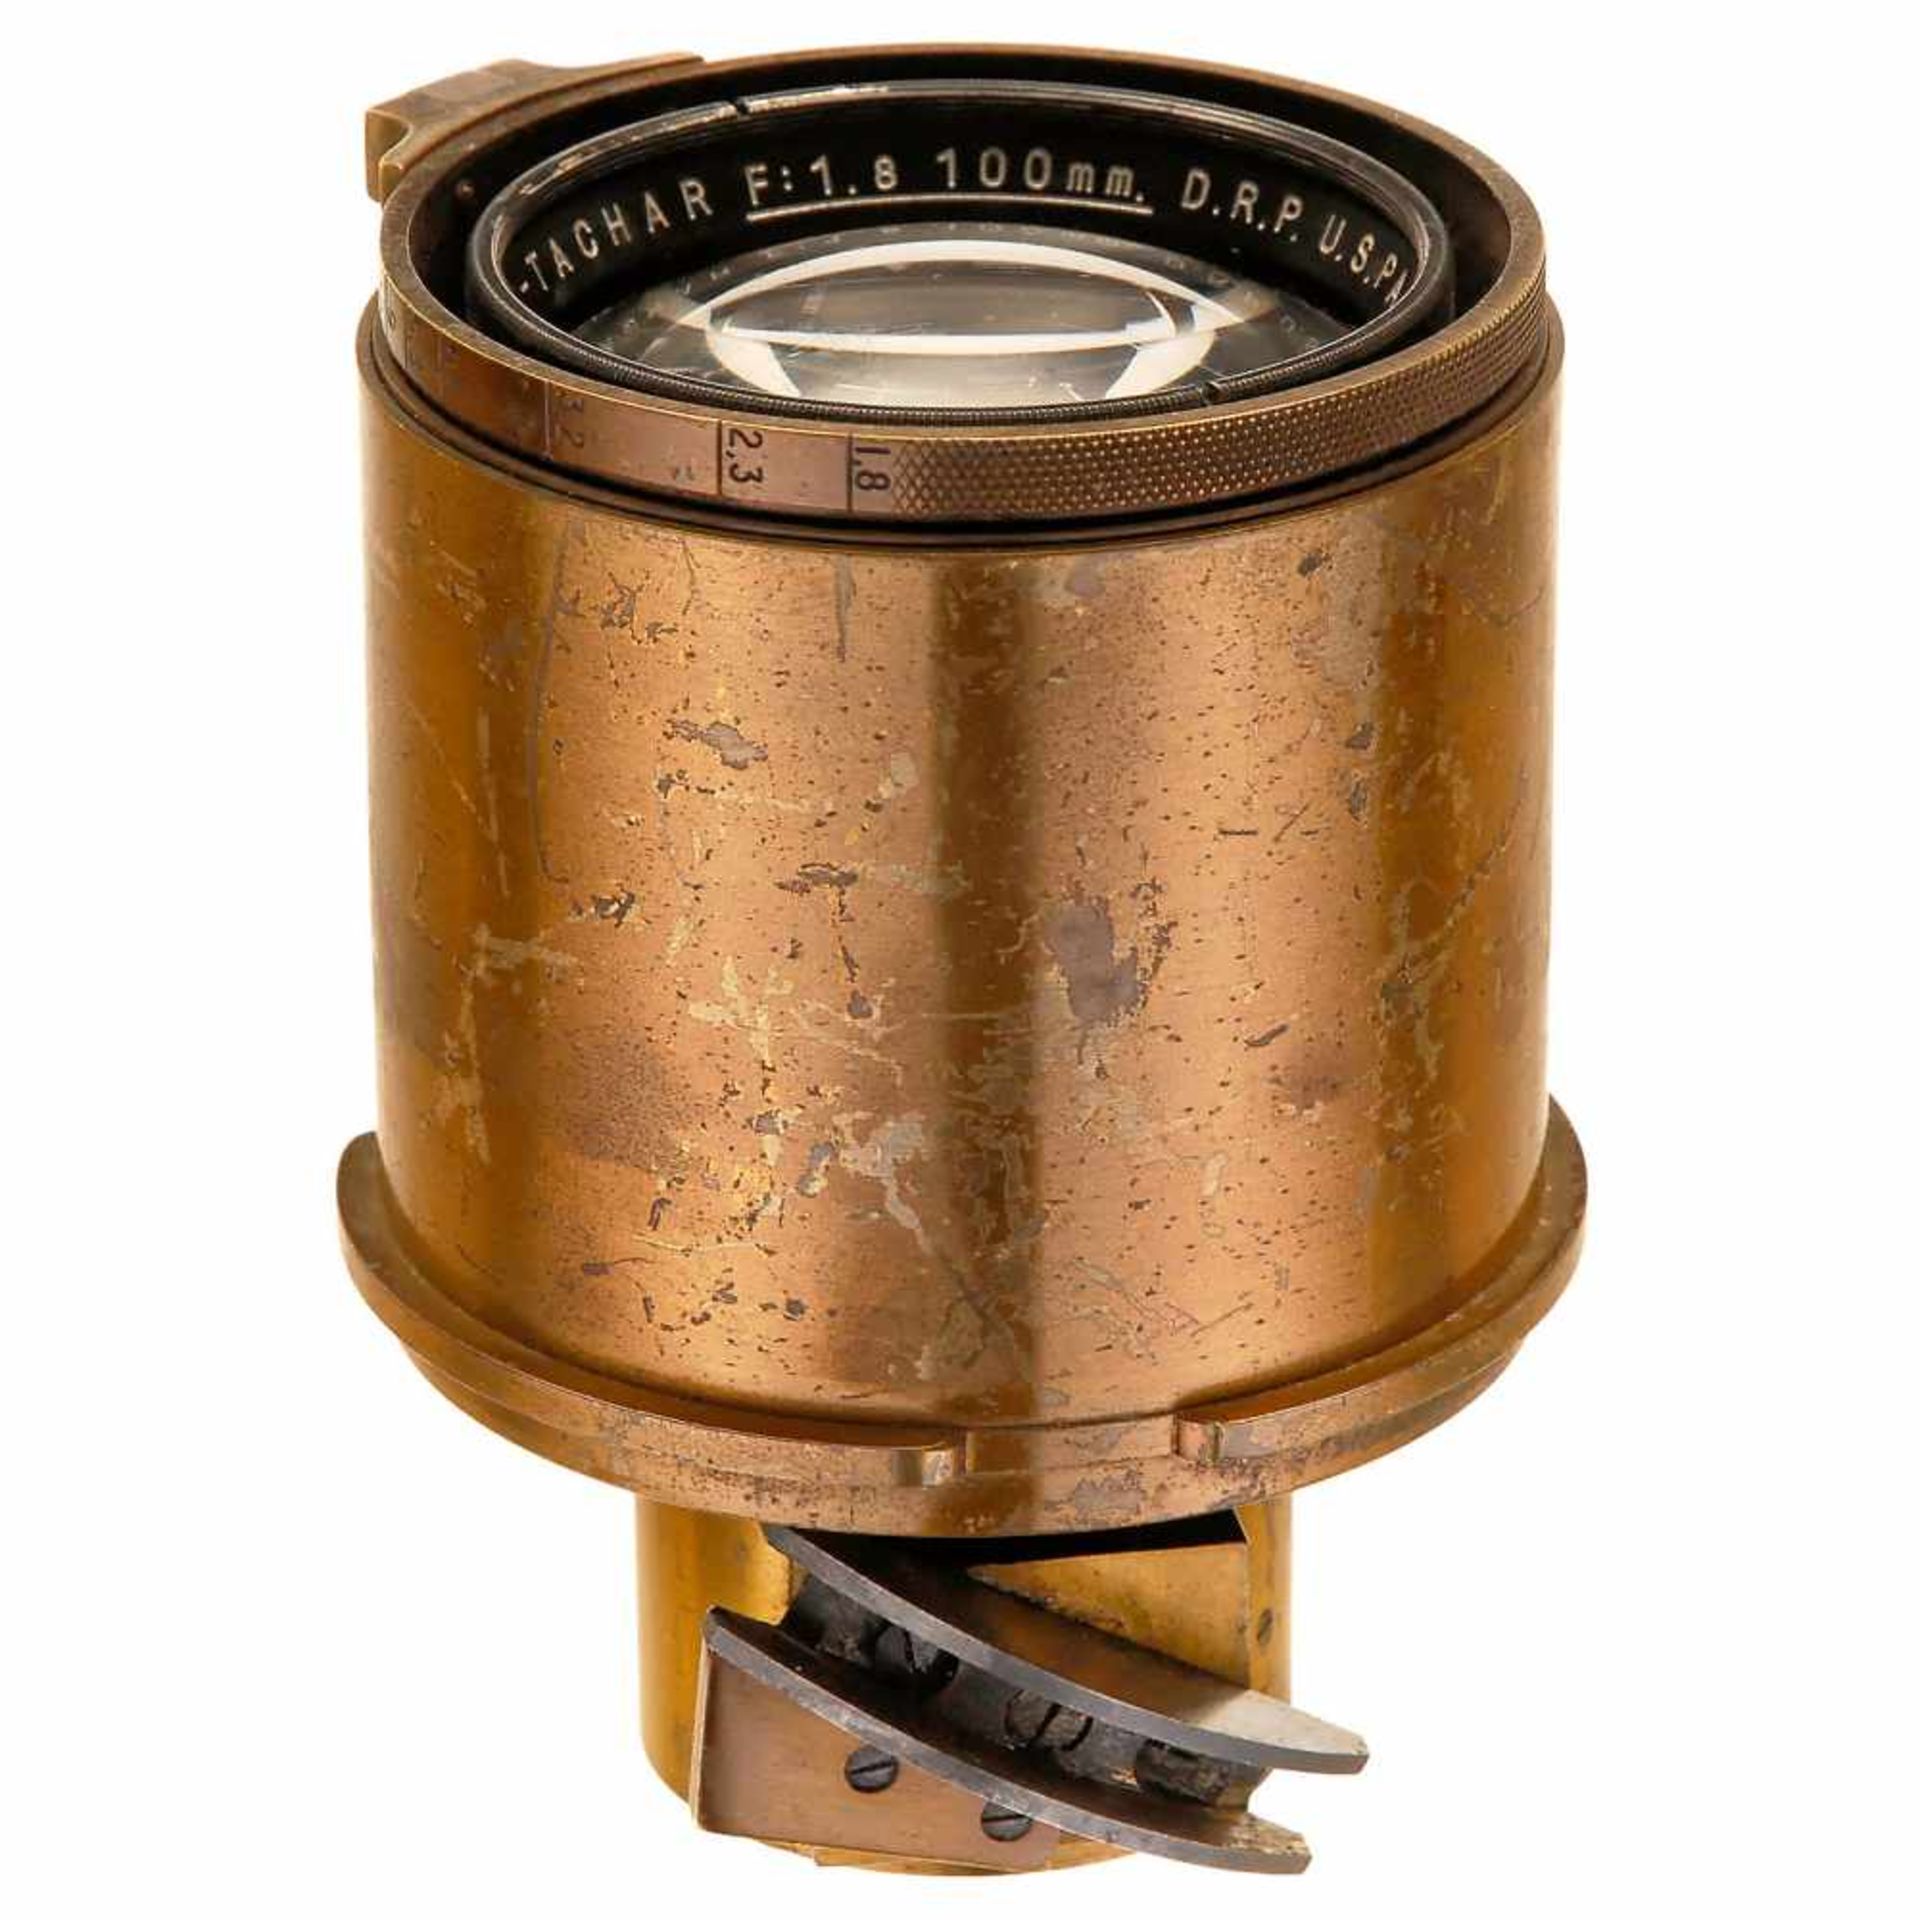 Pan-Tachar 1,8/100 mm (Debrie Parvo)Astro, Berlin. No. 22802, brass, for Debrie Parvo and Super